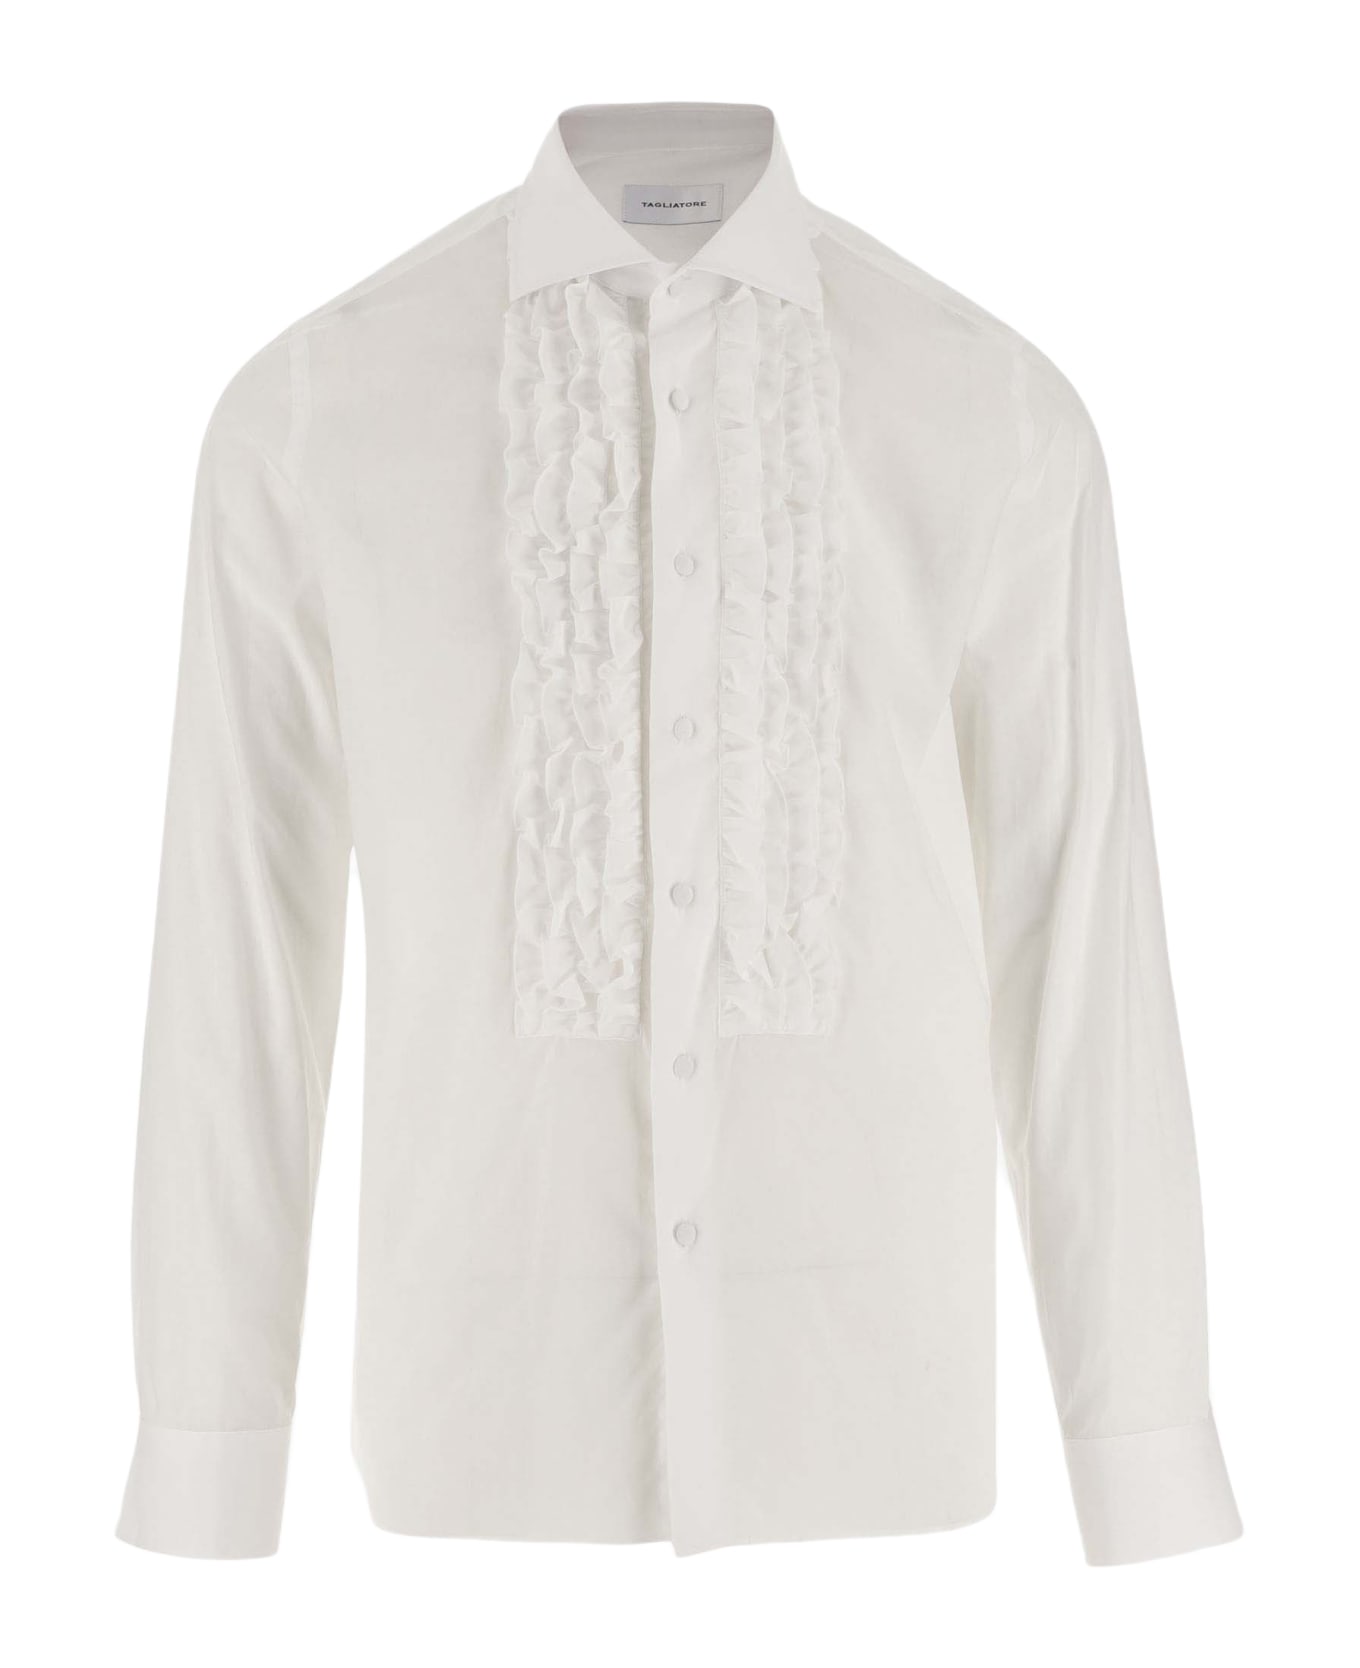 Tagliatore Cotton Poplin Shirt With Ruffles - White